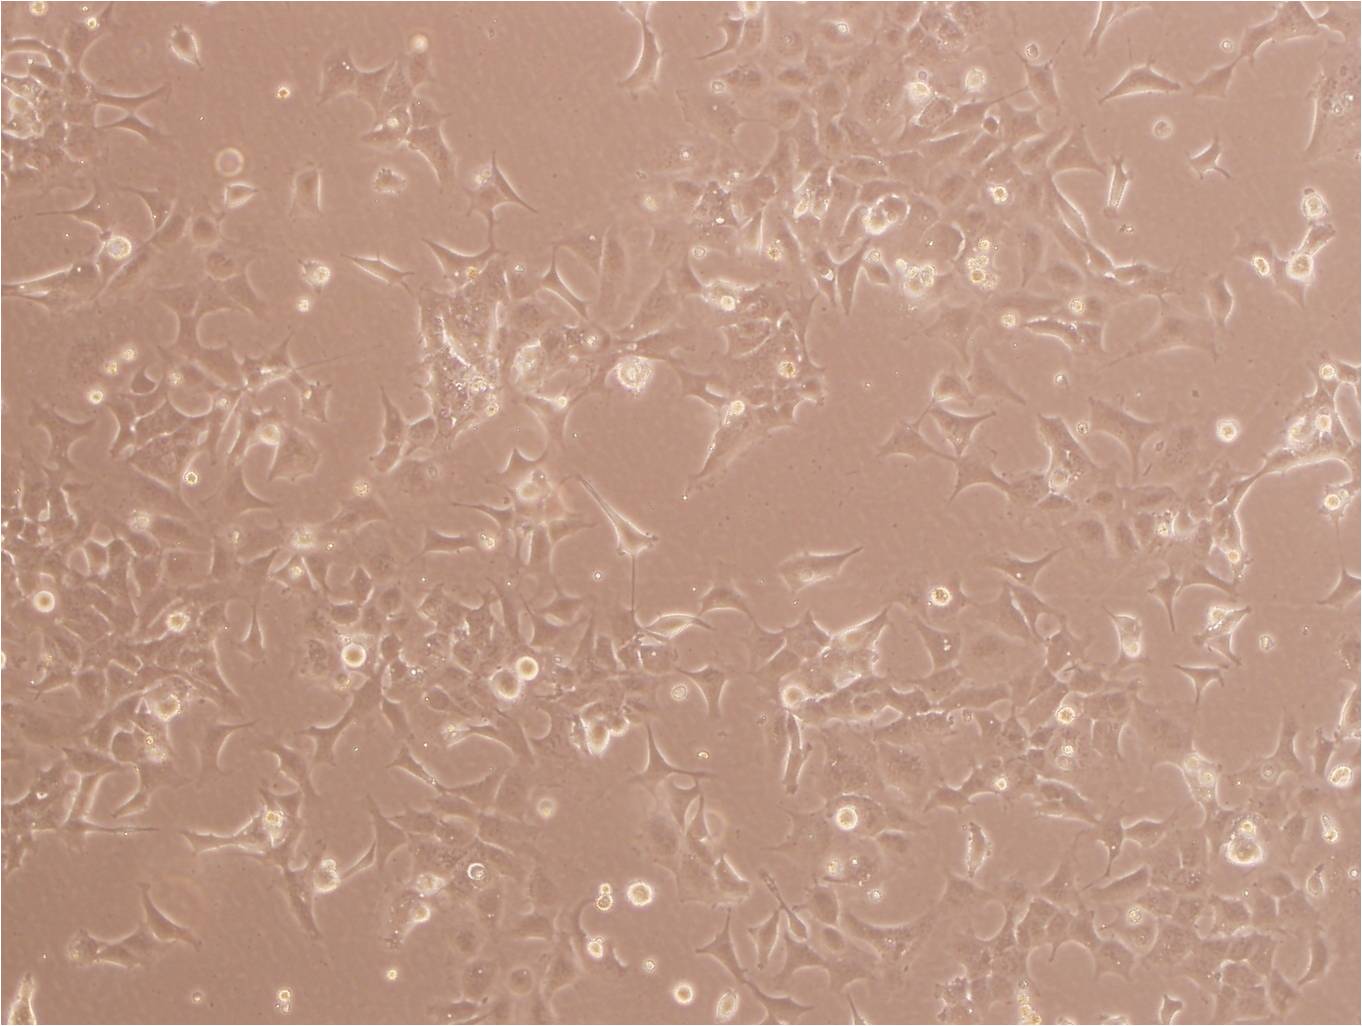 CBRH-7919 Adherent大鼠肝癌细胞系,CBRH-7919 Adherent